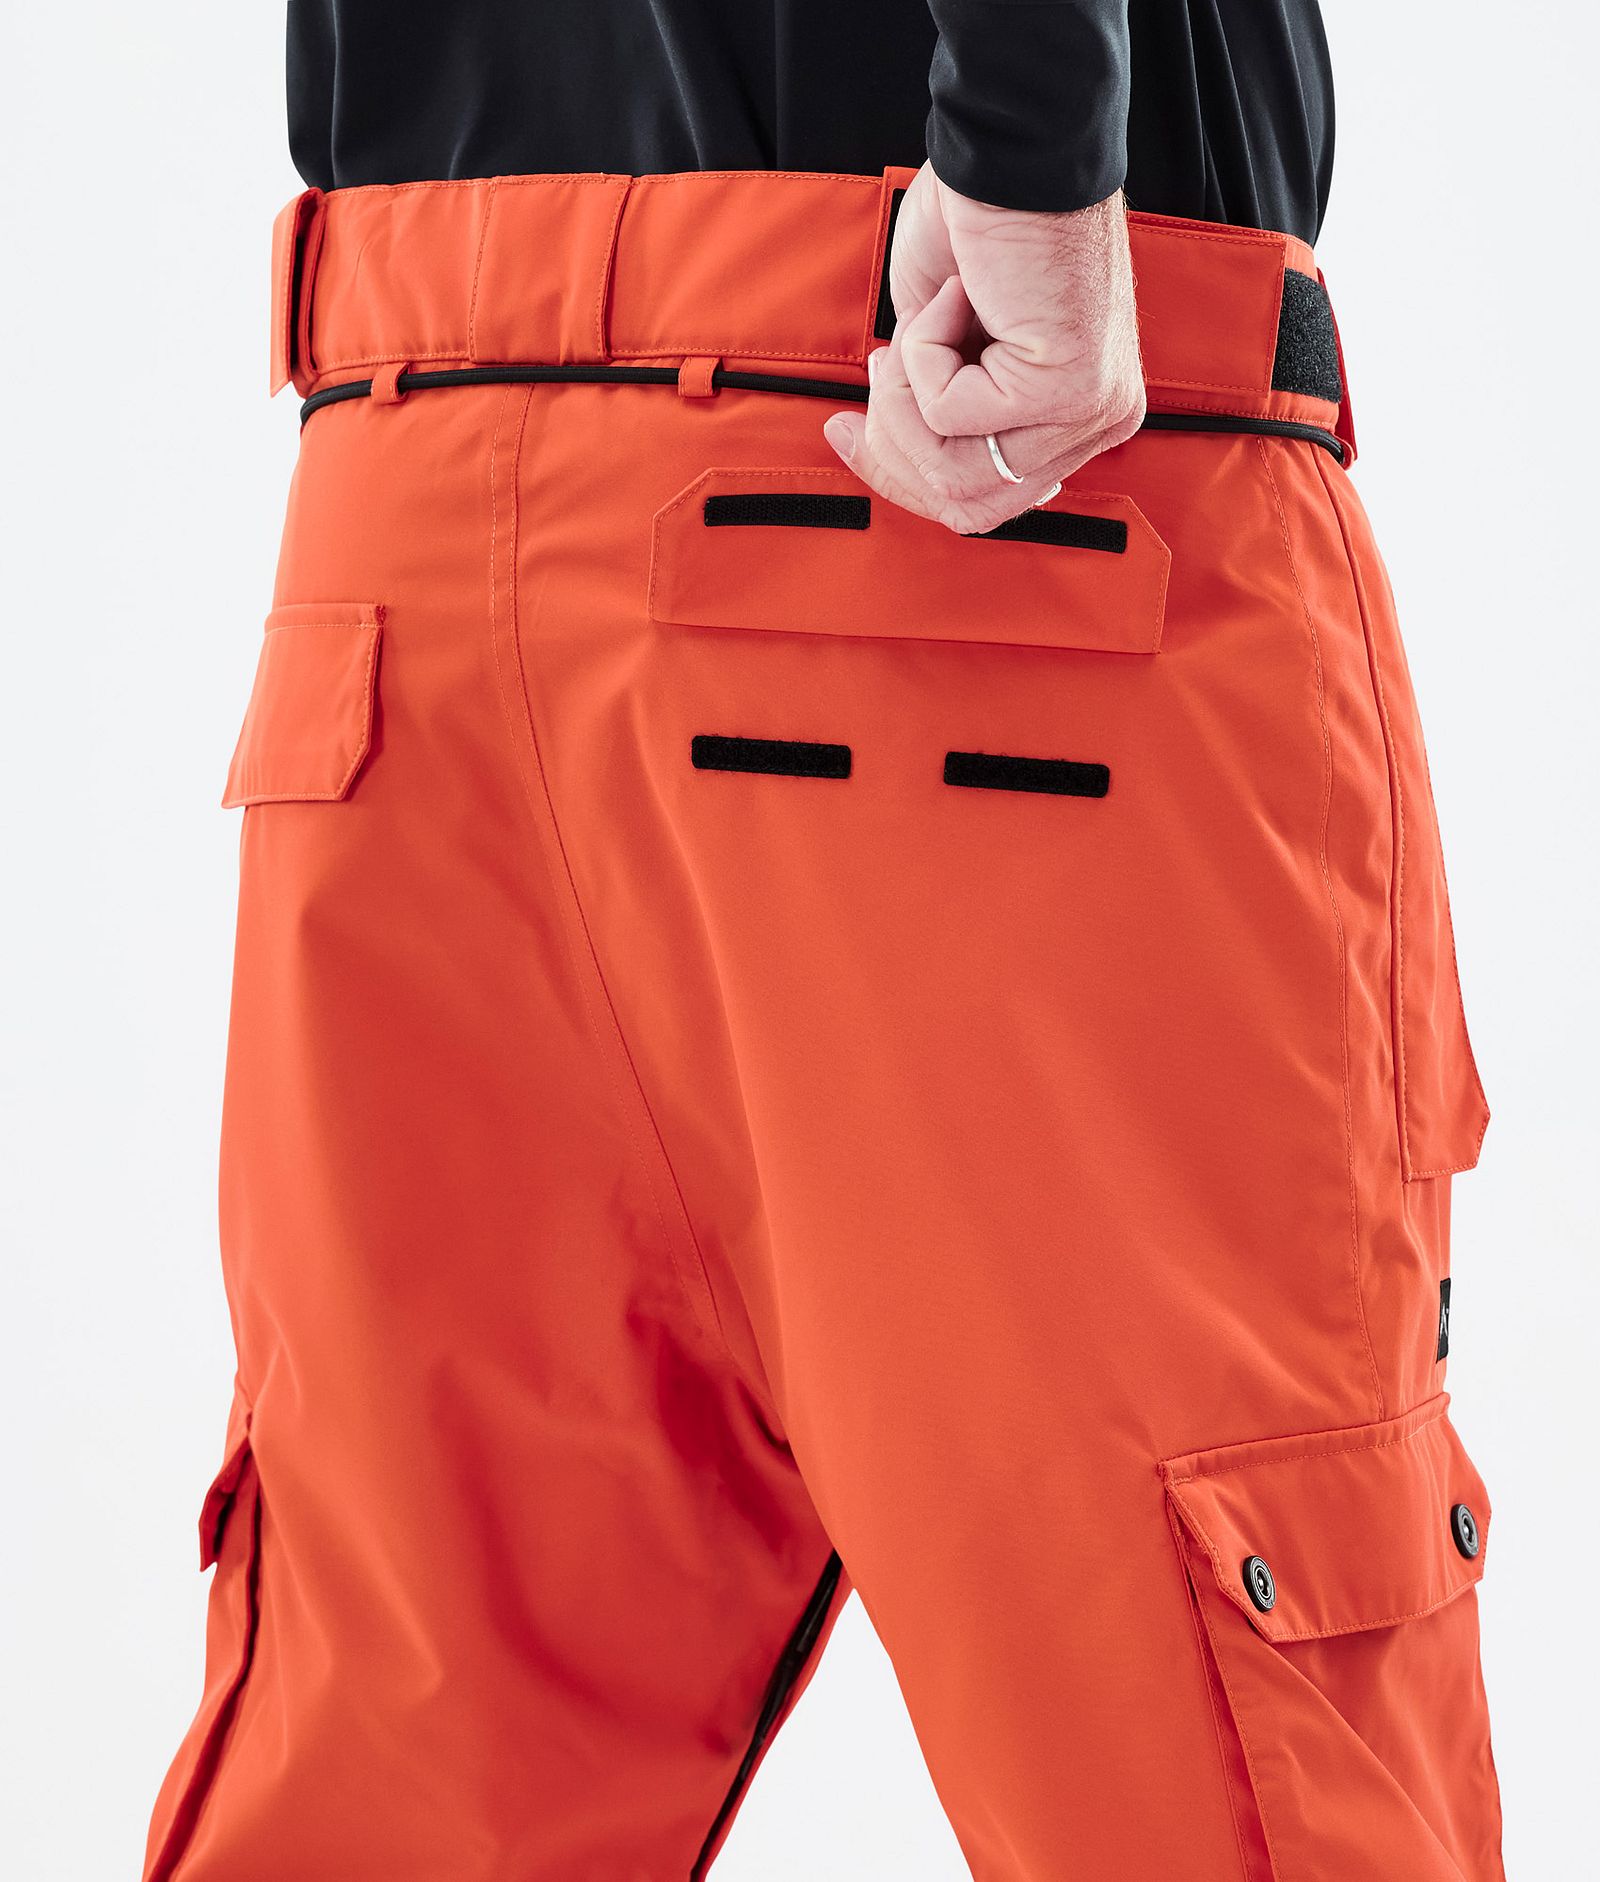 Iconic スキーパンツ メンズ Orange